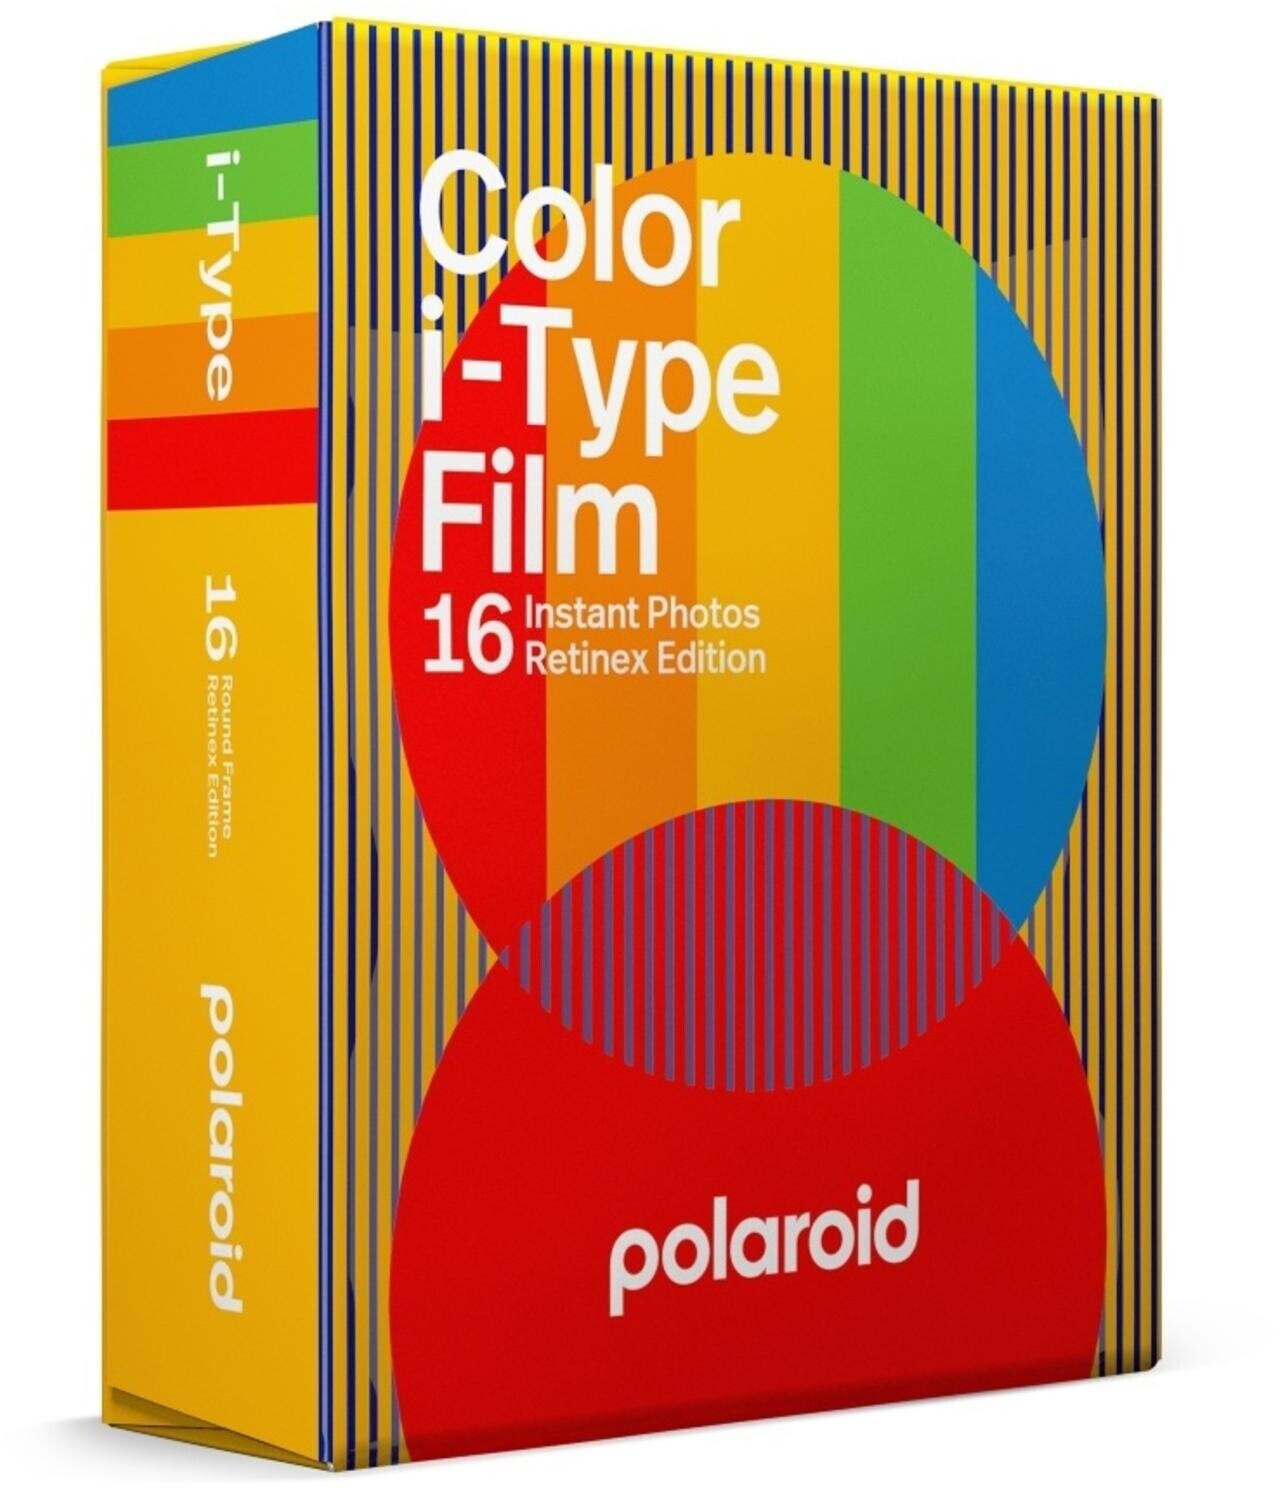  Polaroid Color I-Type Film - Retinex Edition Round Frame -  Double Pack (16 Photos) (6285) : Electronics